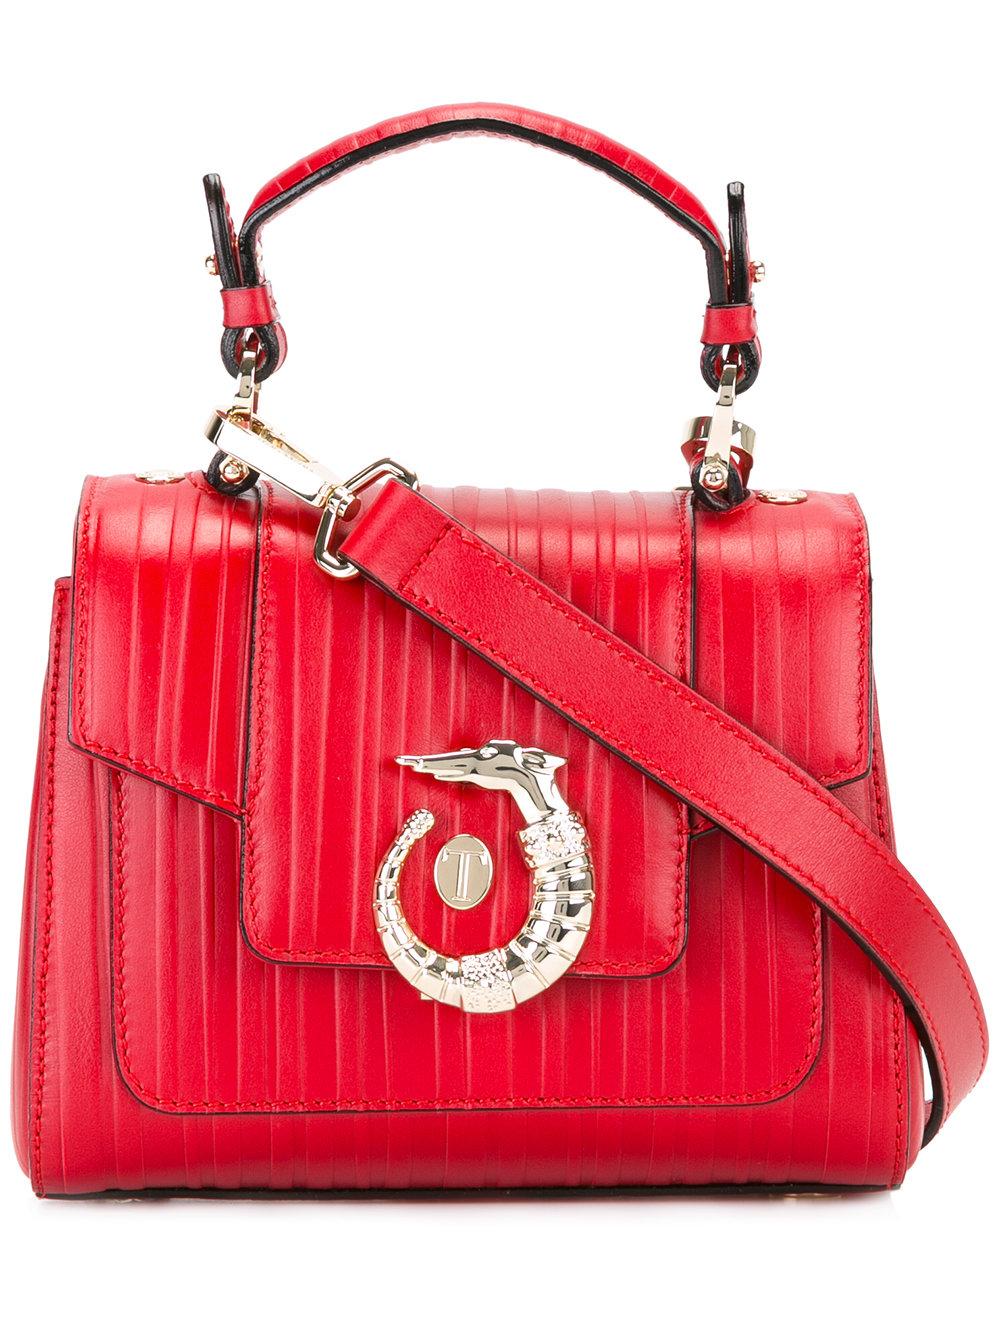 Trussardi Leather Mini Lovy Bag in Red - Lyst